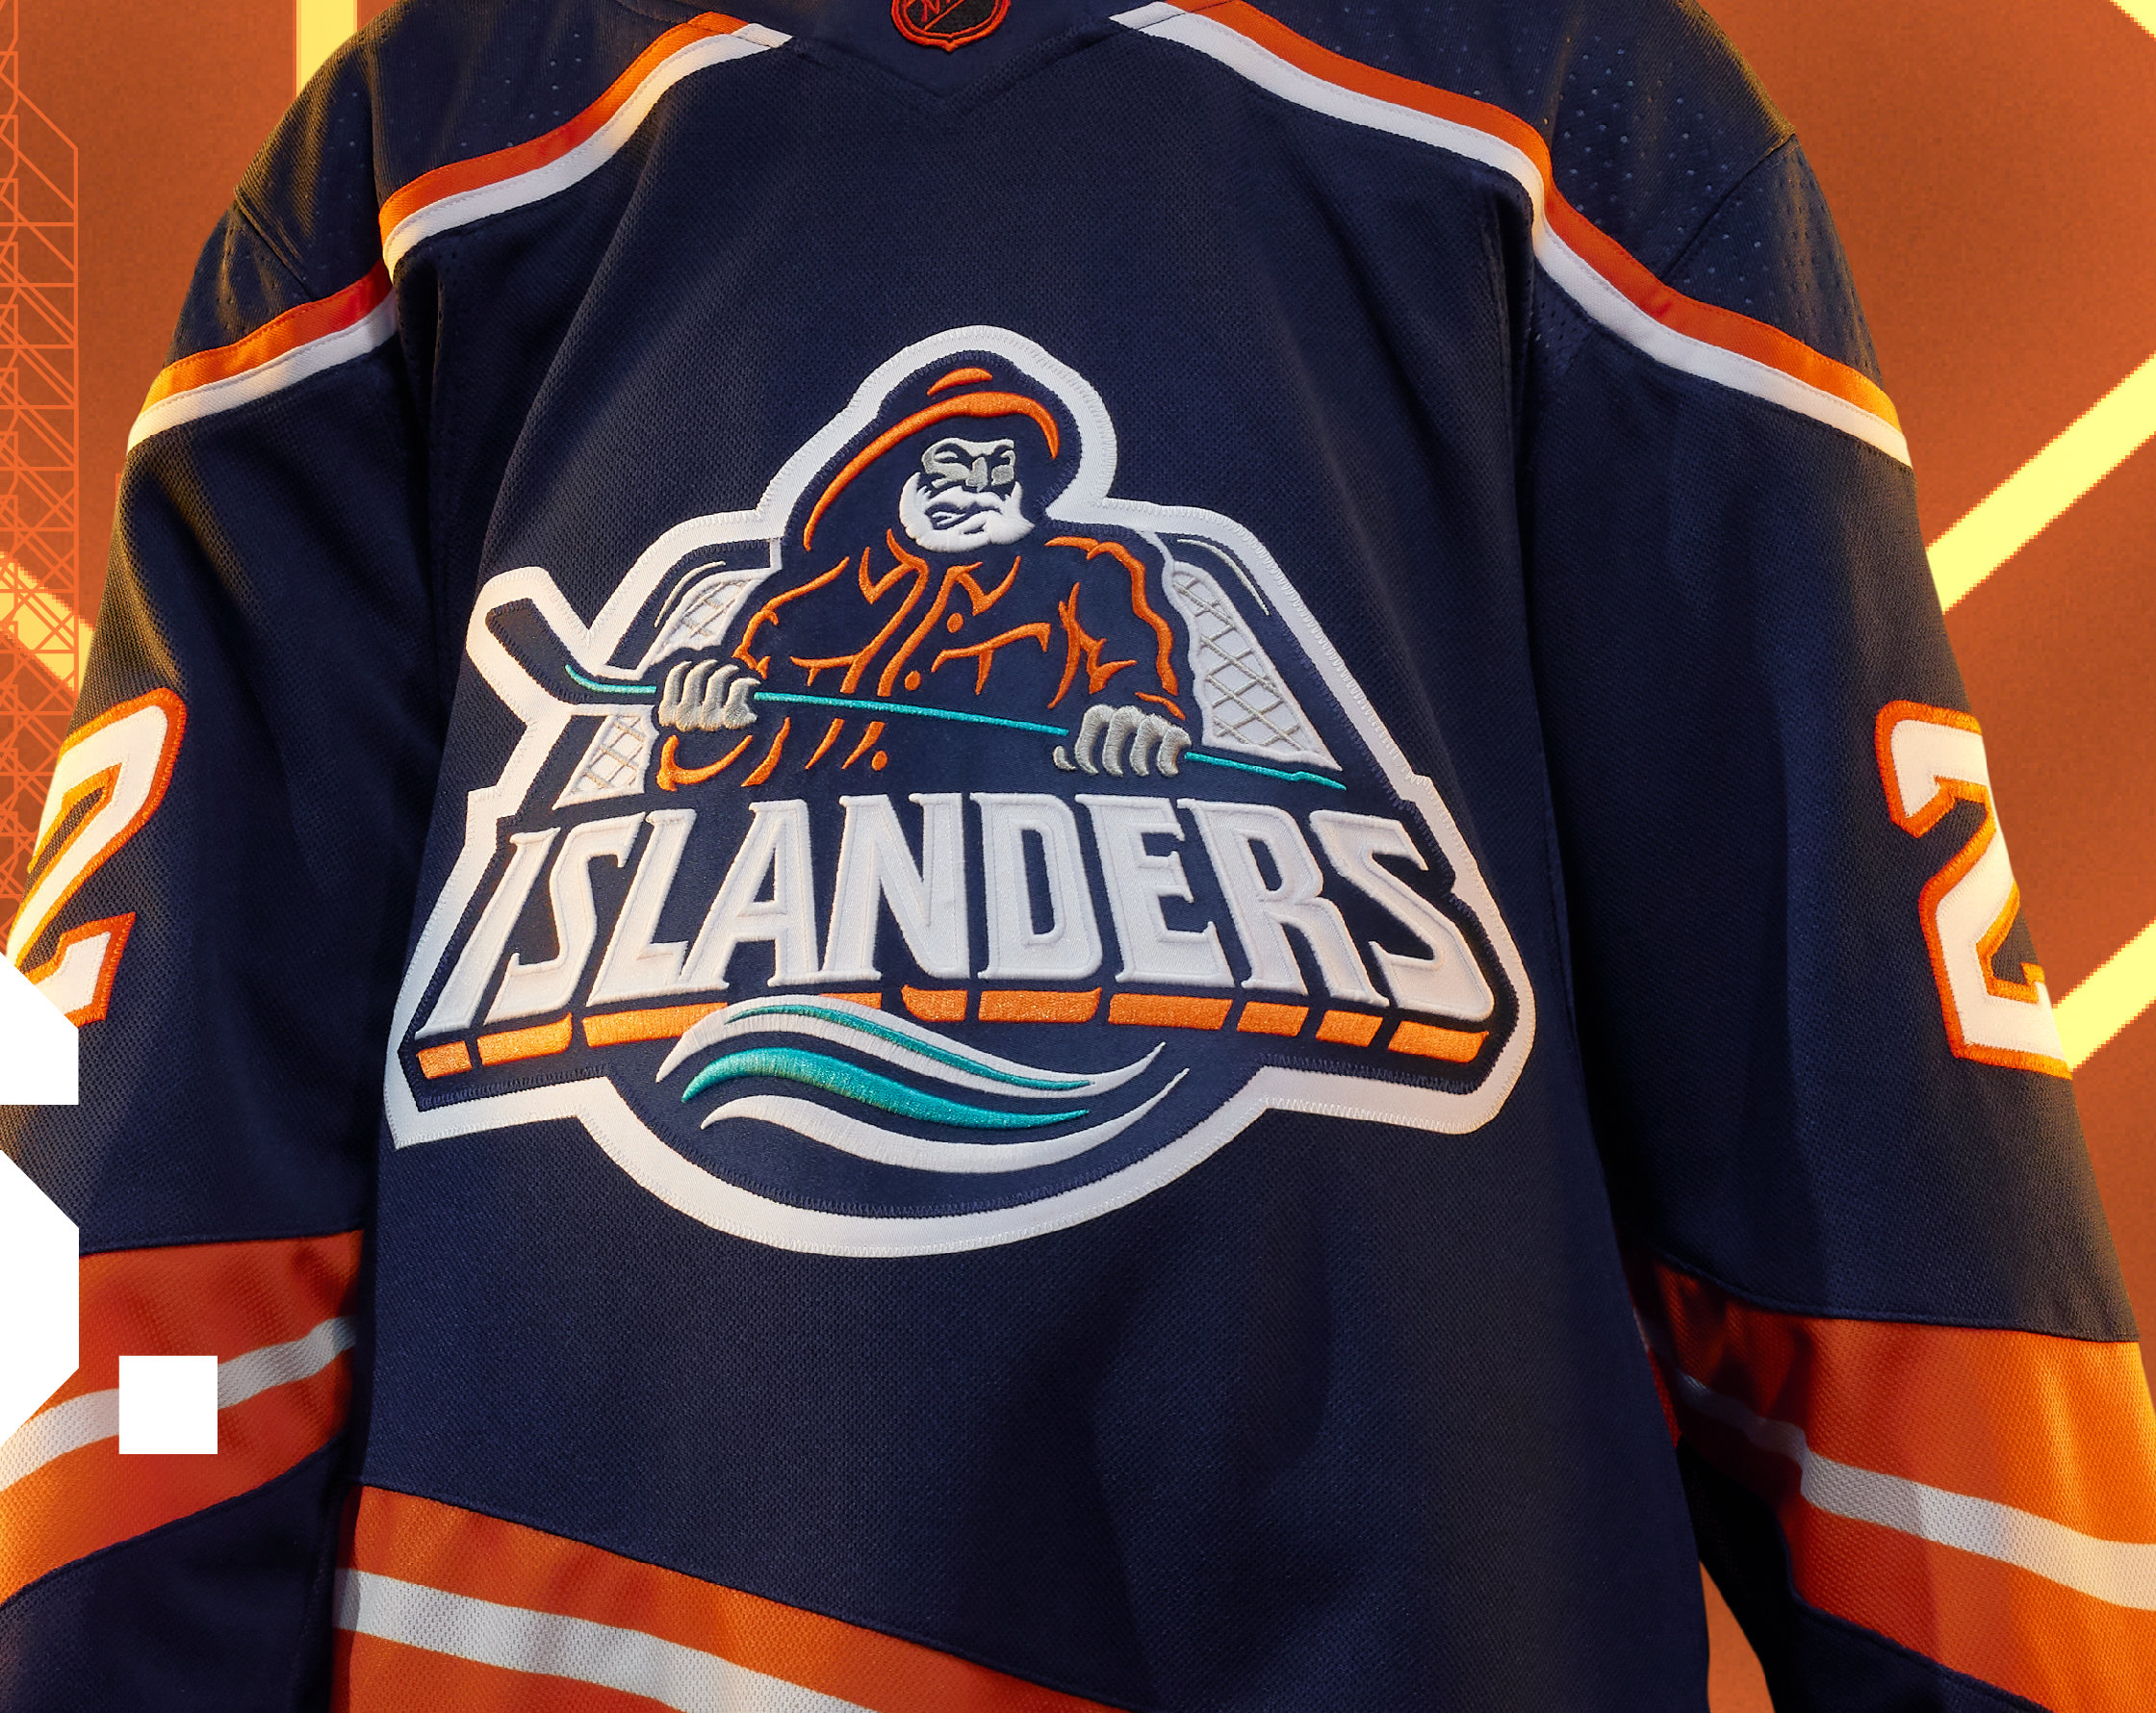 The New York Islanders 'Fisherman' jersey returns - The Hockey News